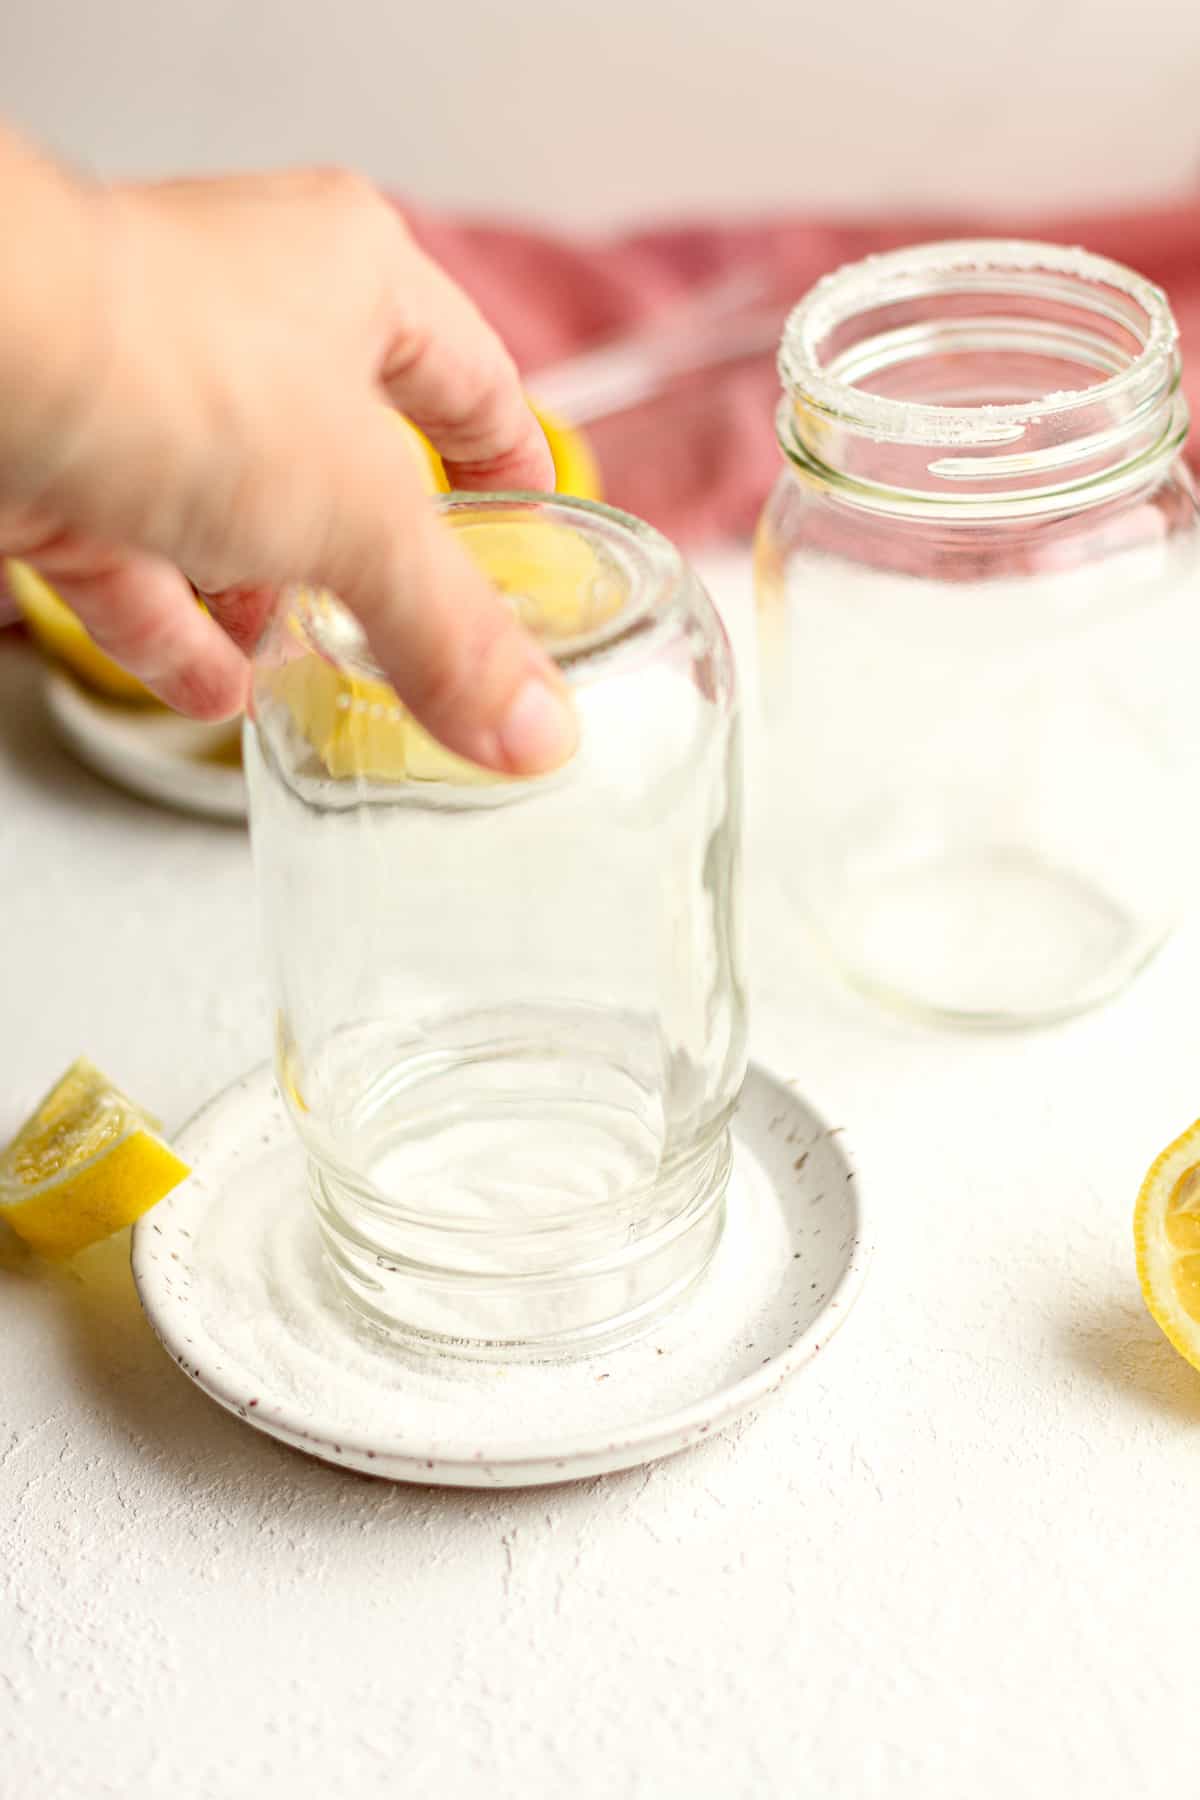 A hand pressing a glass jar in a plate of sugar.